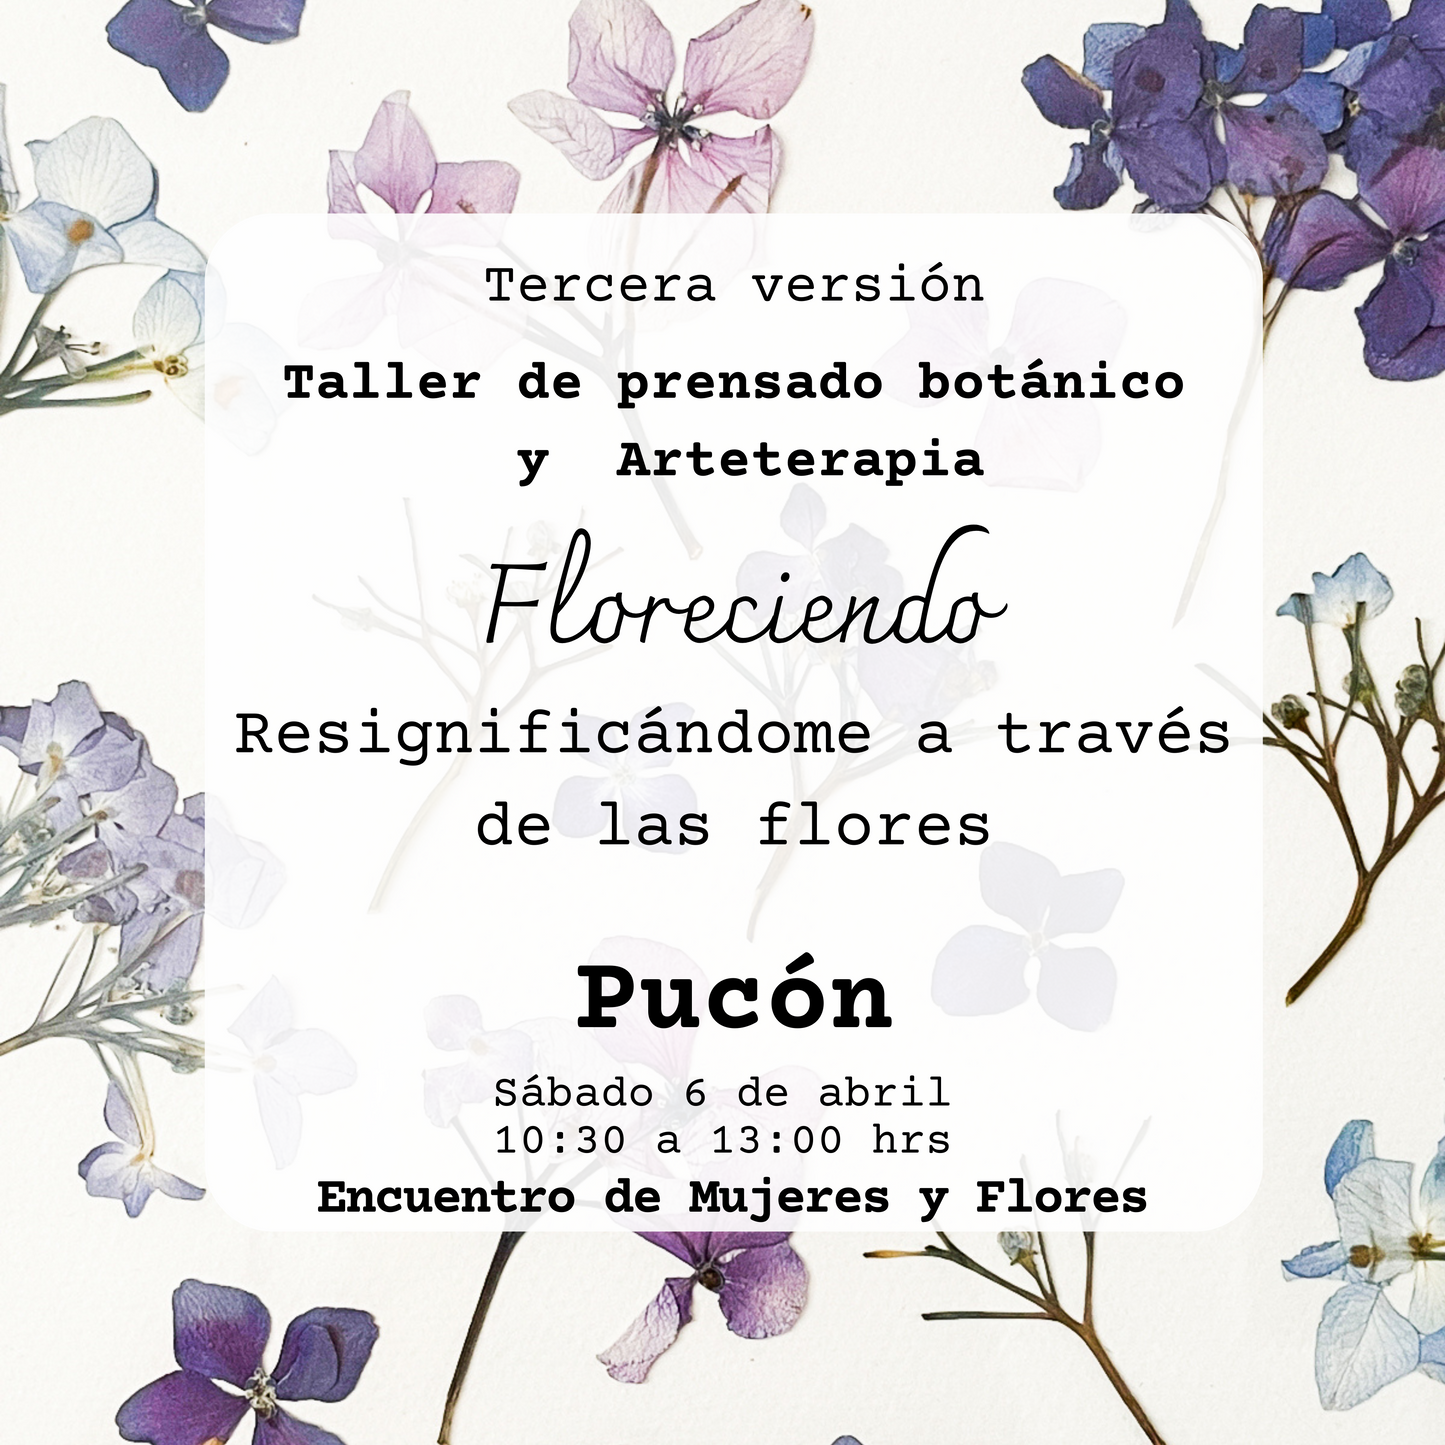 Taller presencial de prensado botánico y arteterapia | 6 de abril, Pucón